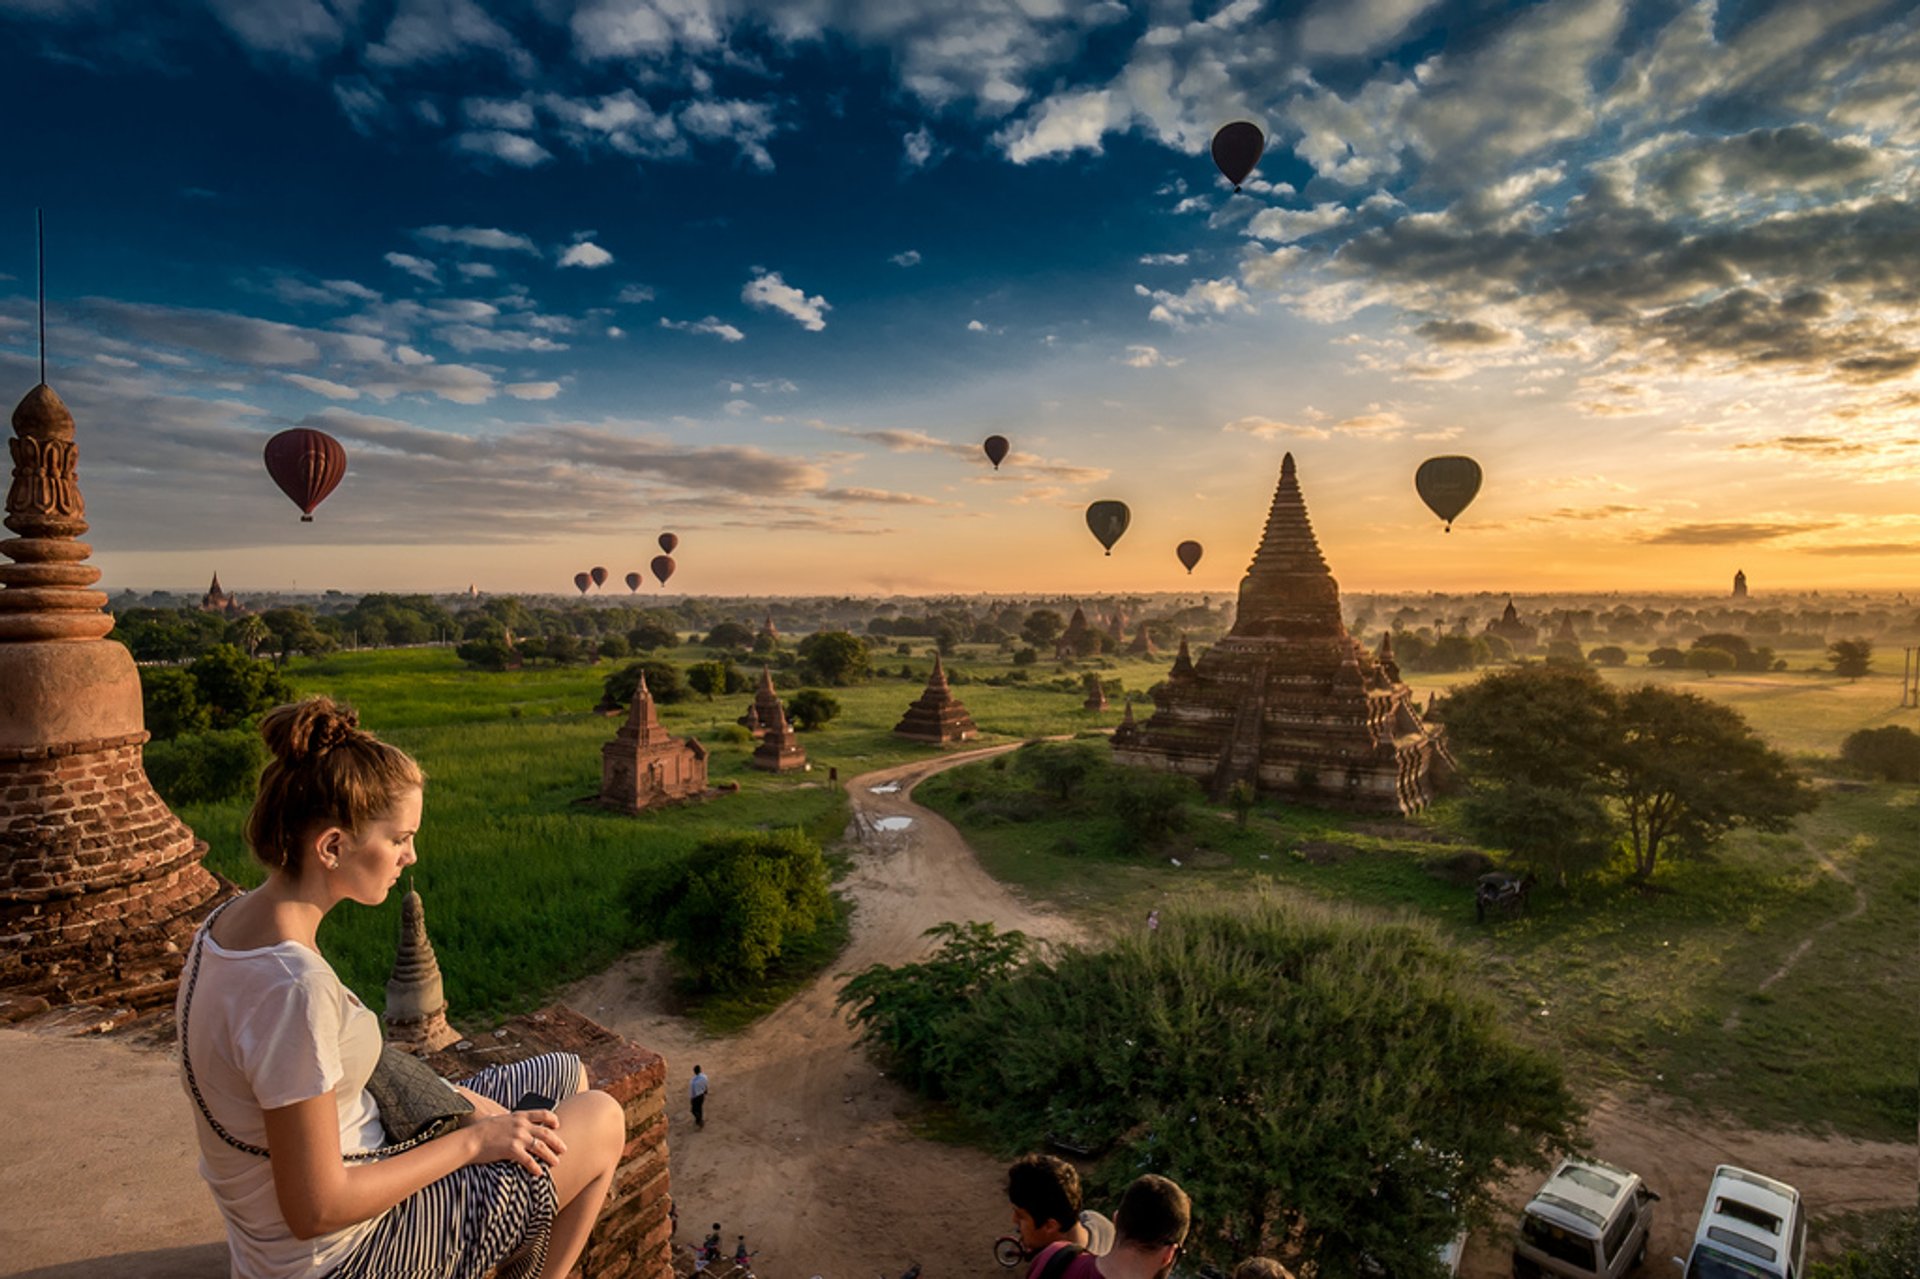 Hot Ballon Bagan